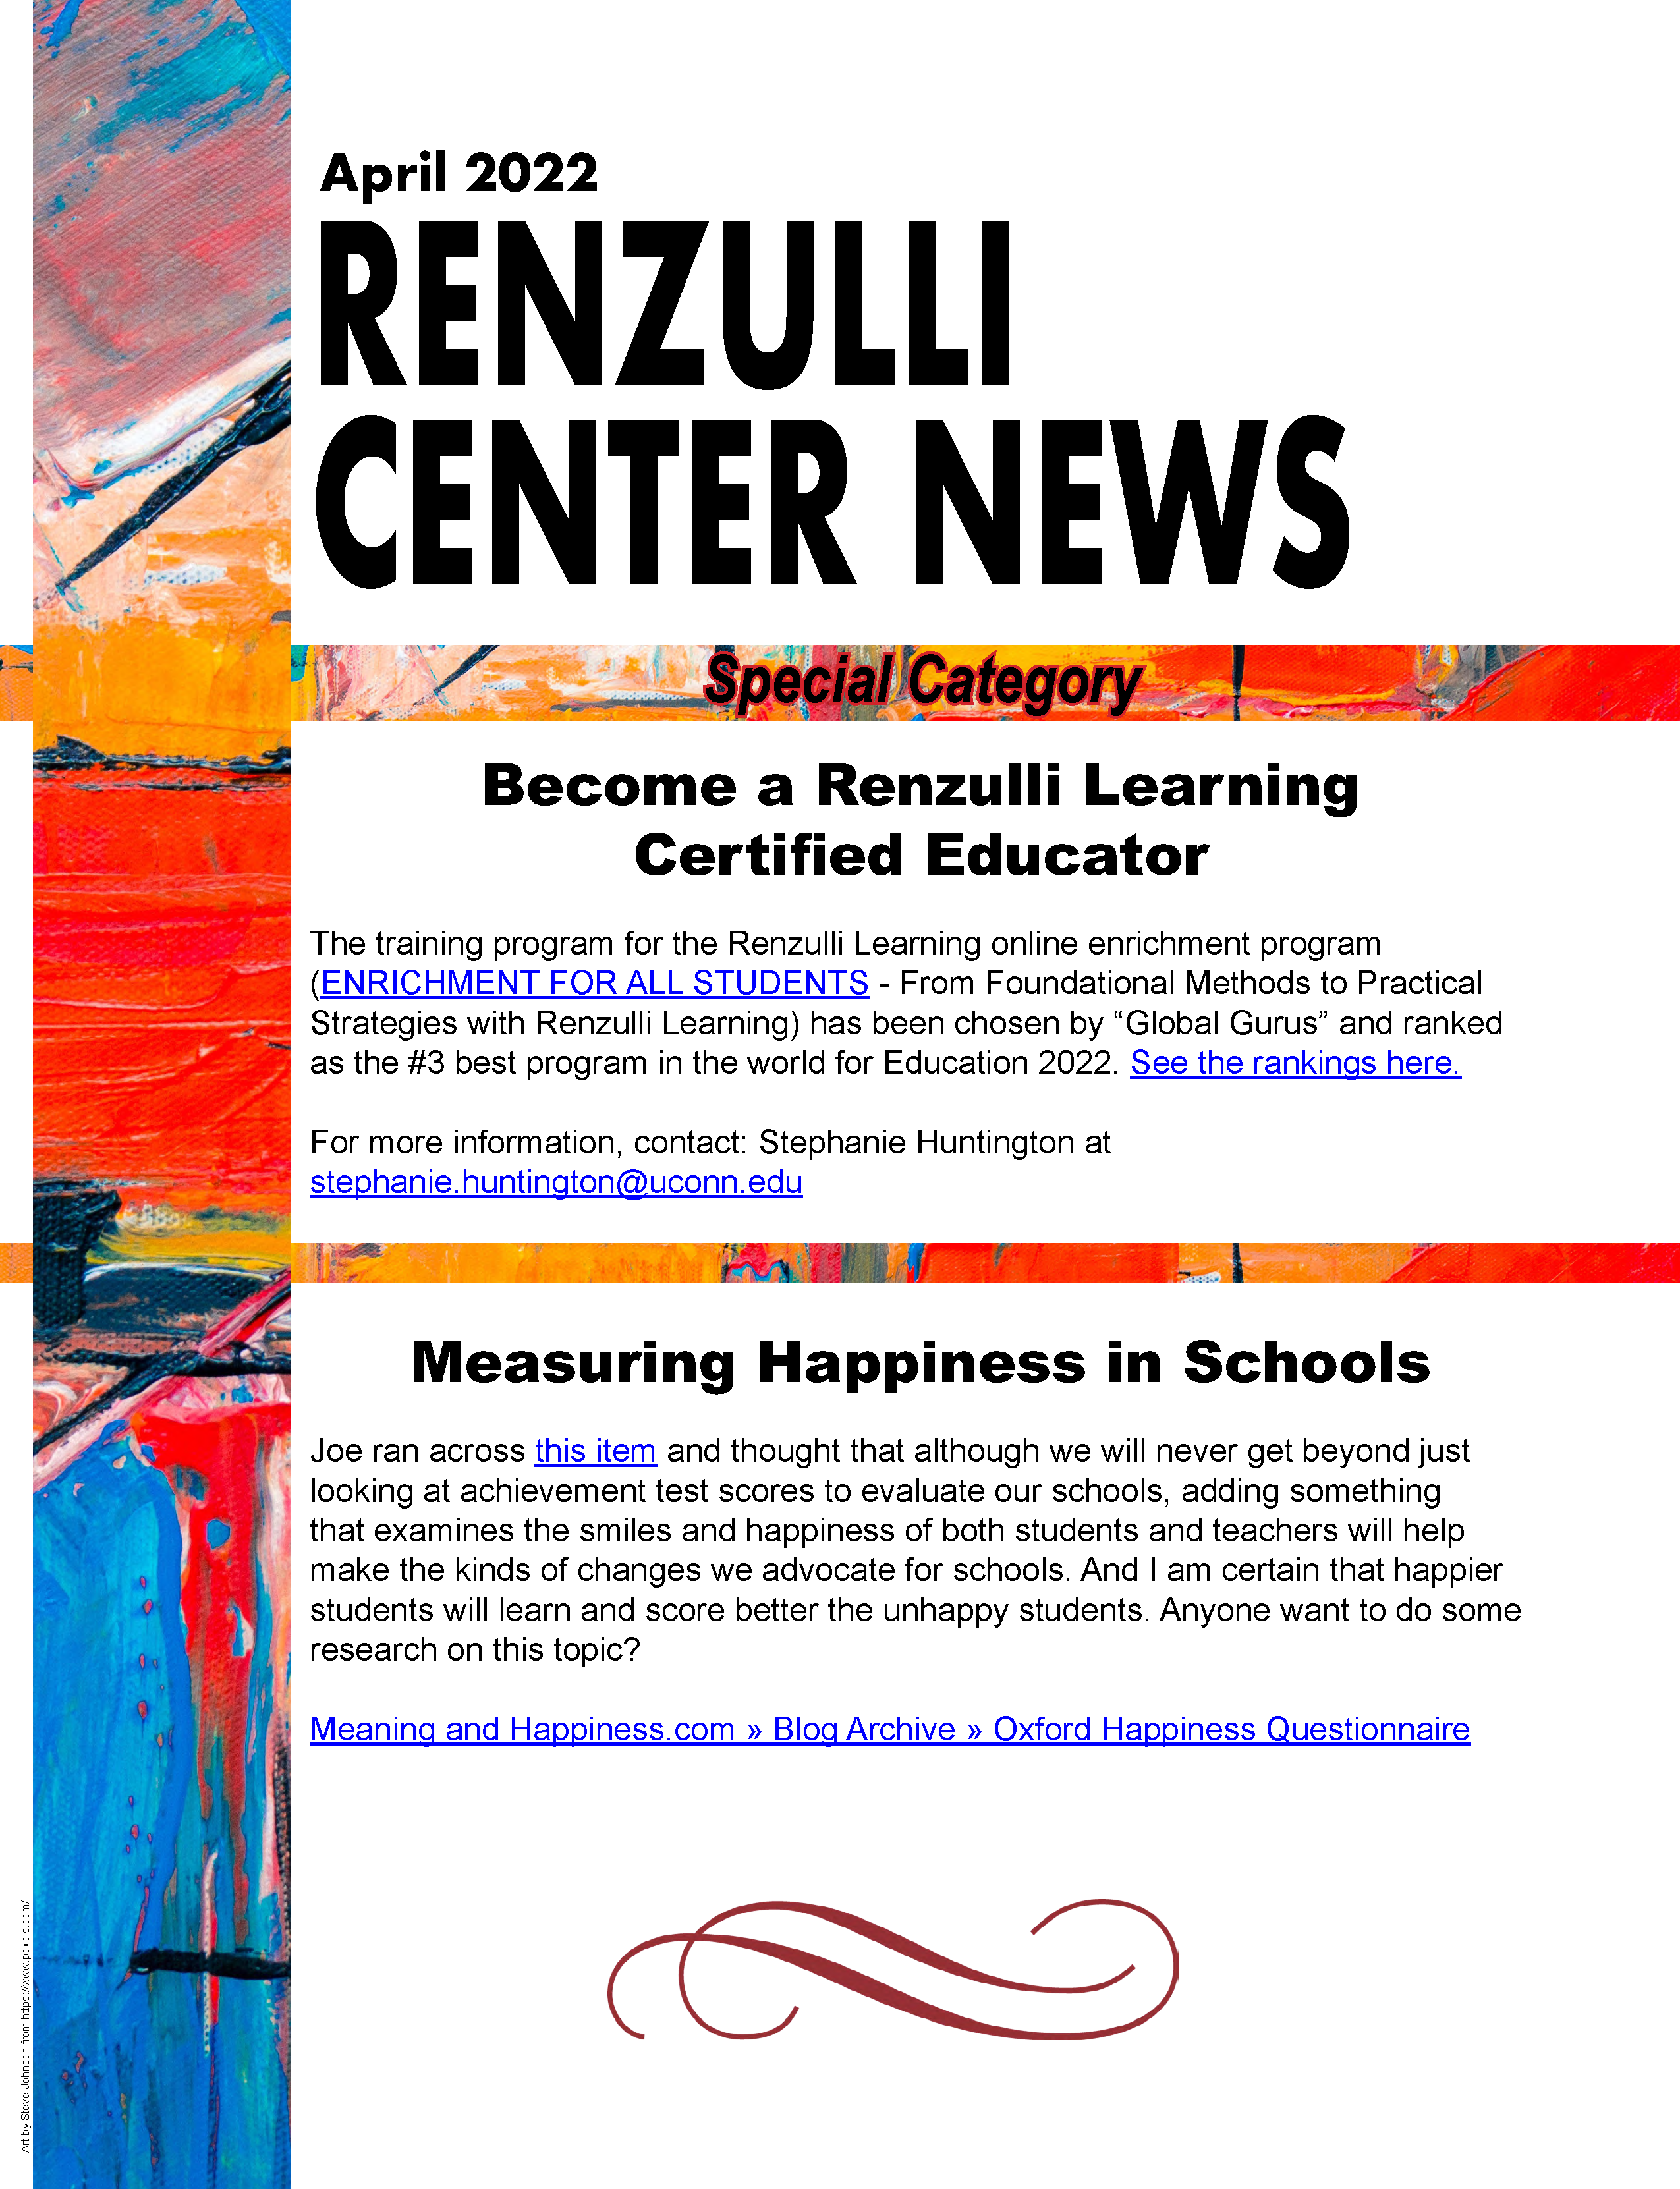 April 2022 Renzulli News Cover Graphic